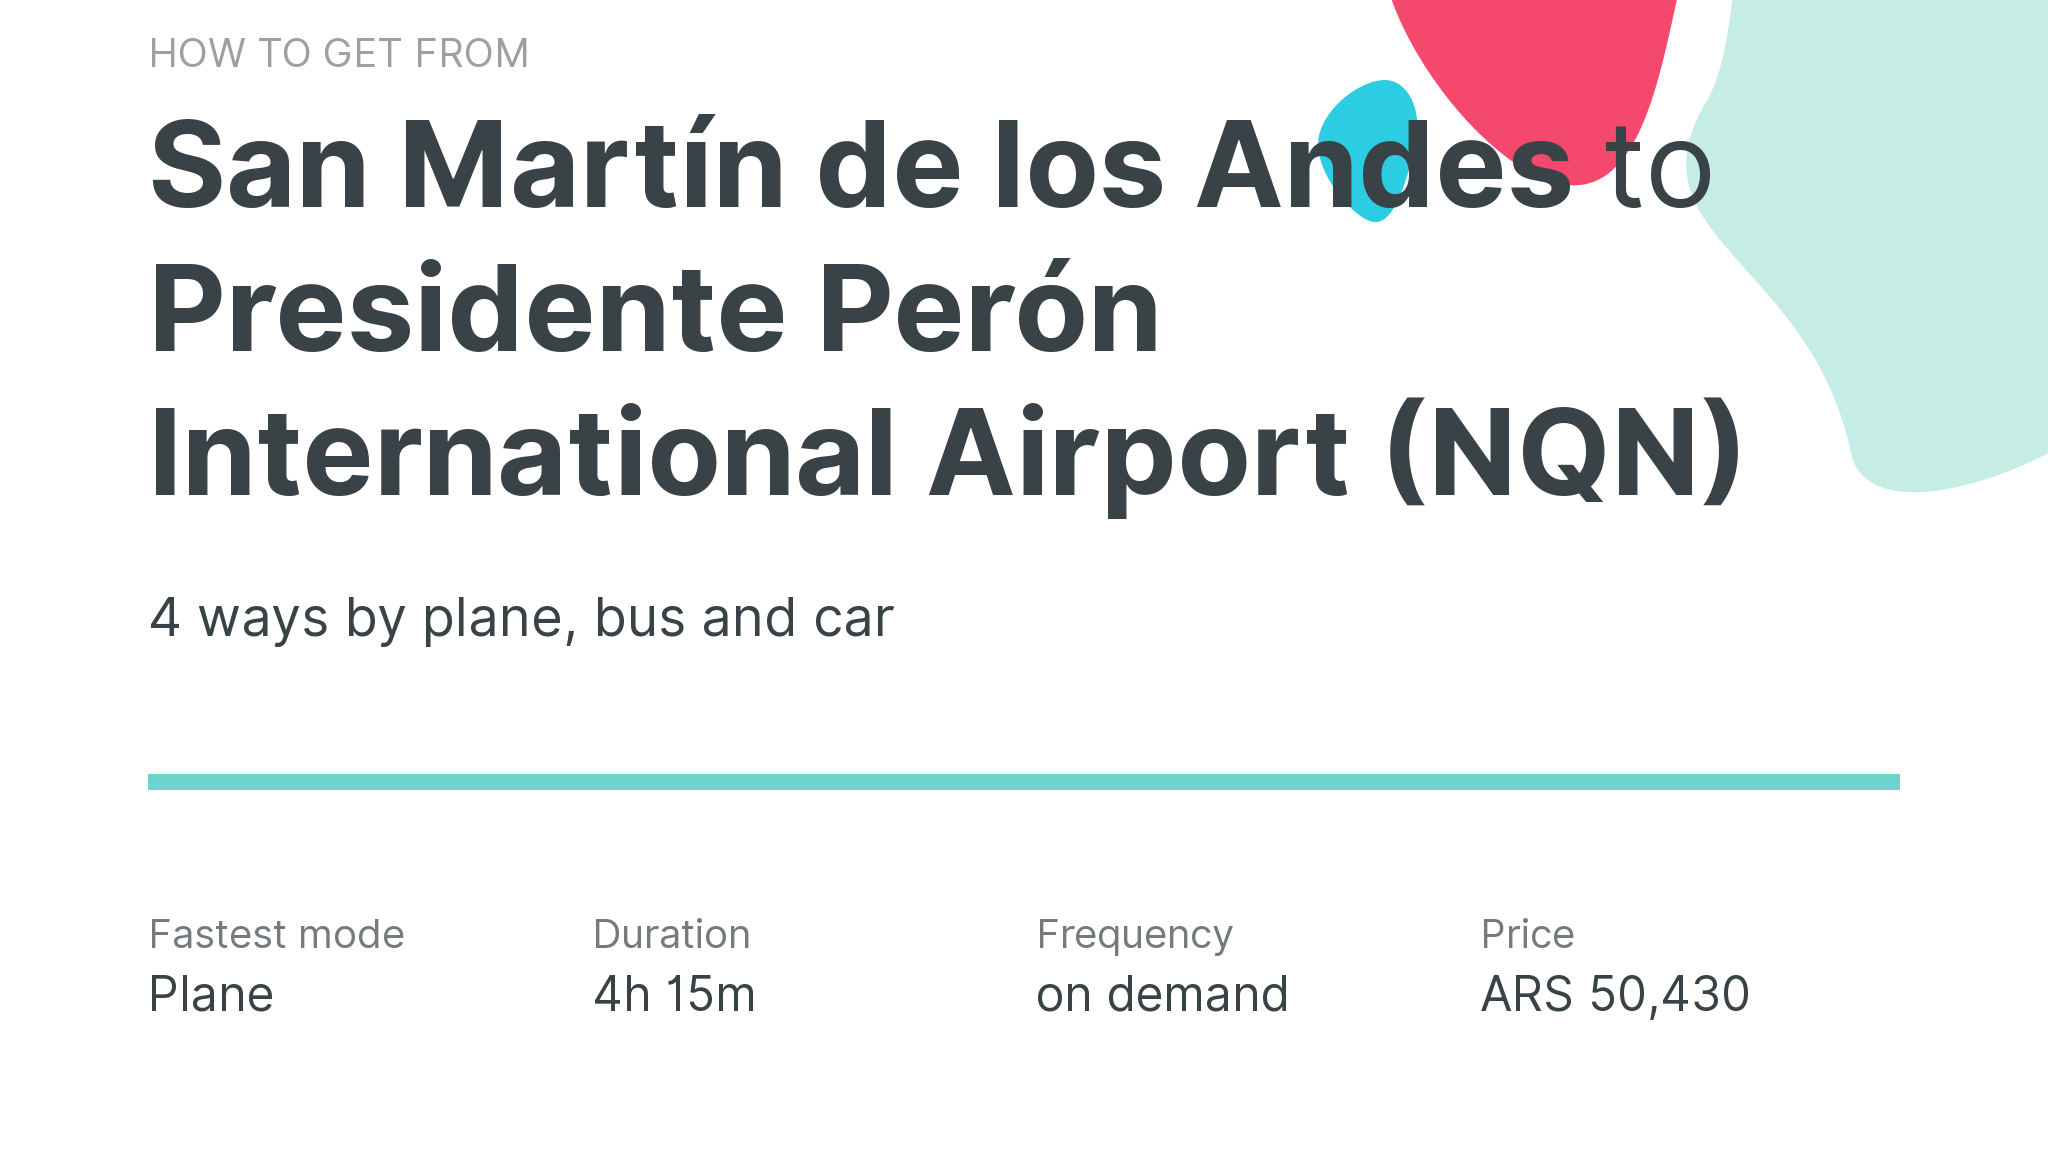 How do I get from San Martín de los Andes to Presidente Perón International Airport (NQN)